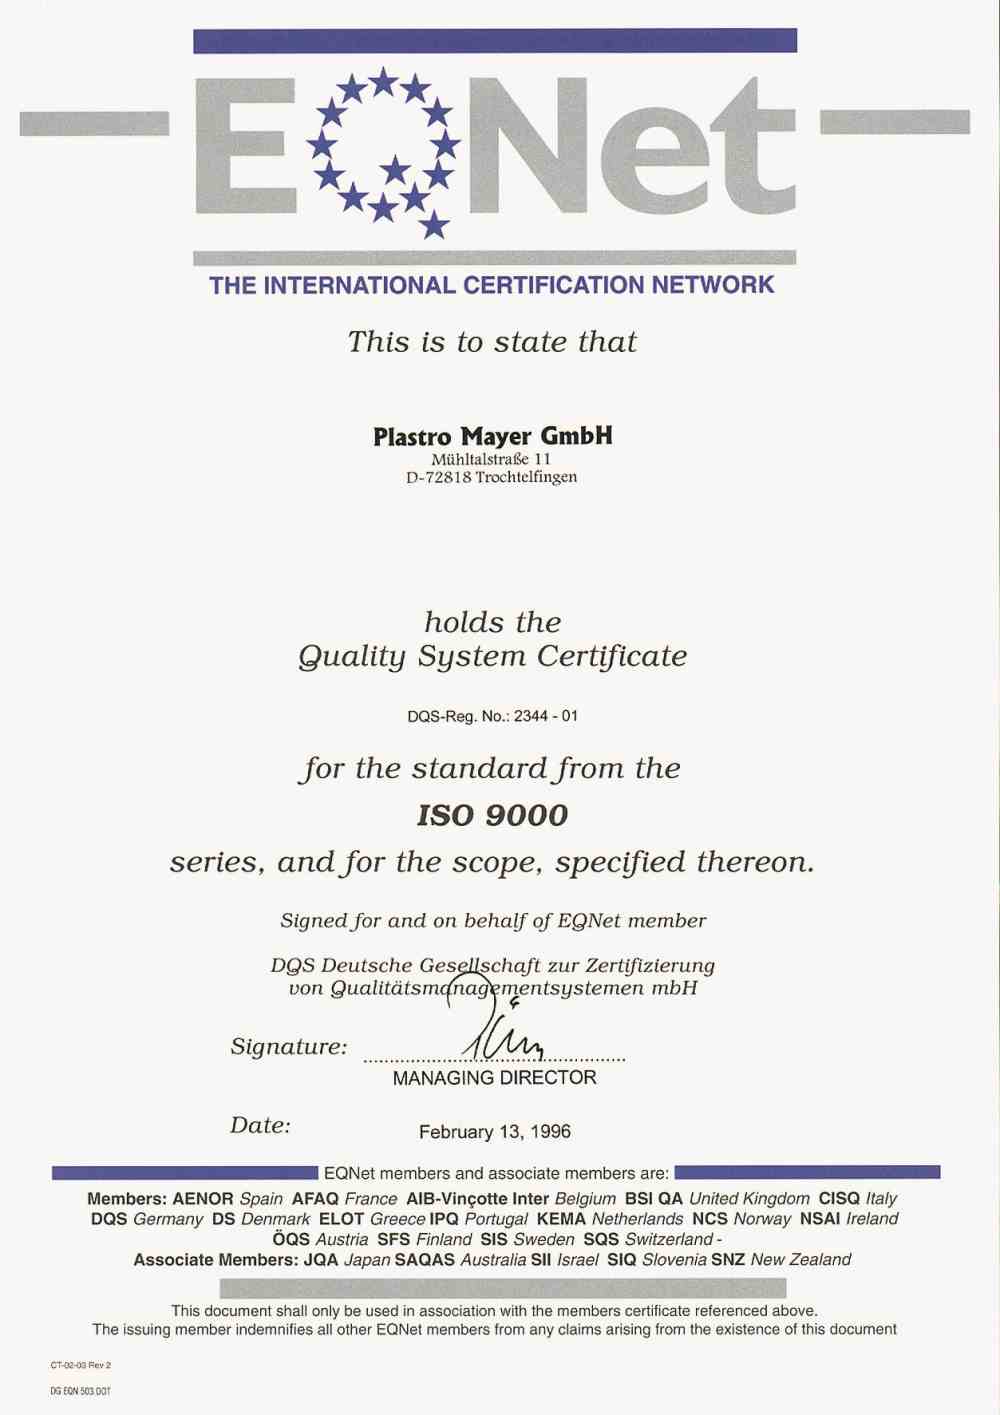 1996: Certification according to DIN EN ISO 9000